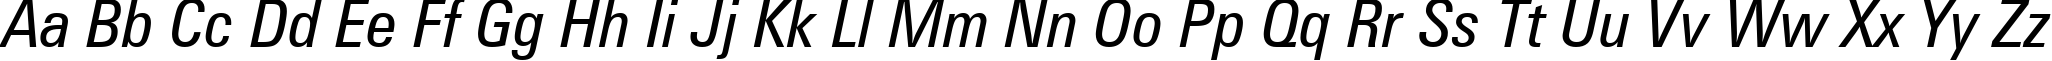 Пример написания английского алфавита шрифтом Zurich Condensed Italic BT